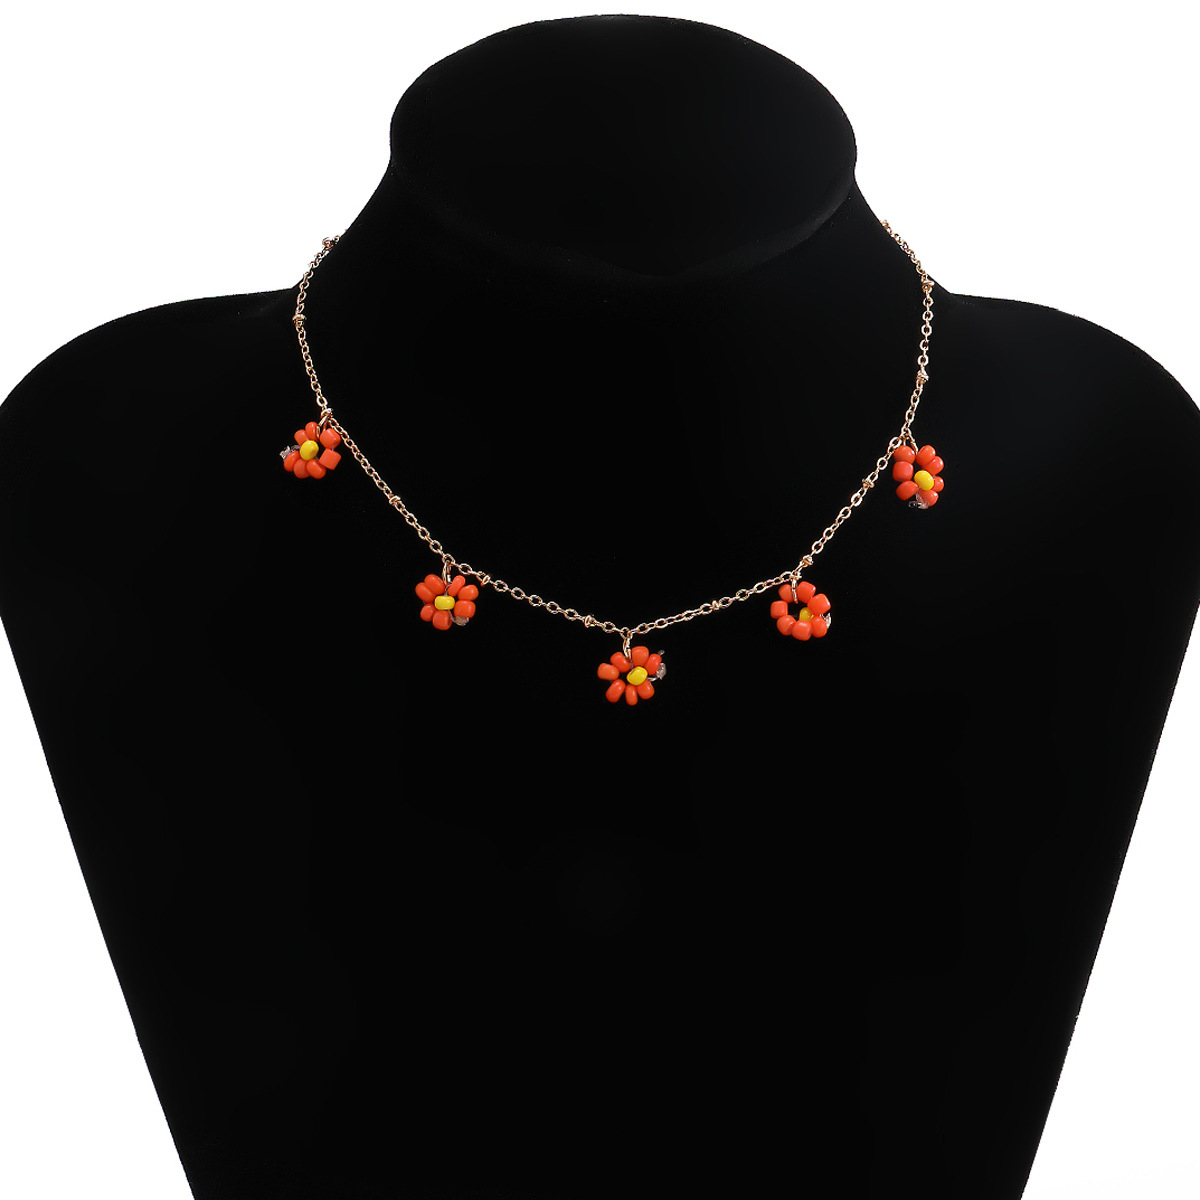 1:Necklace orange